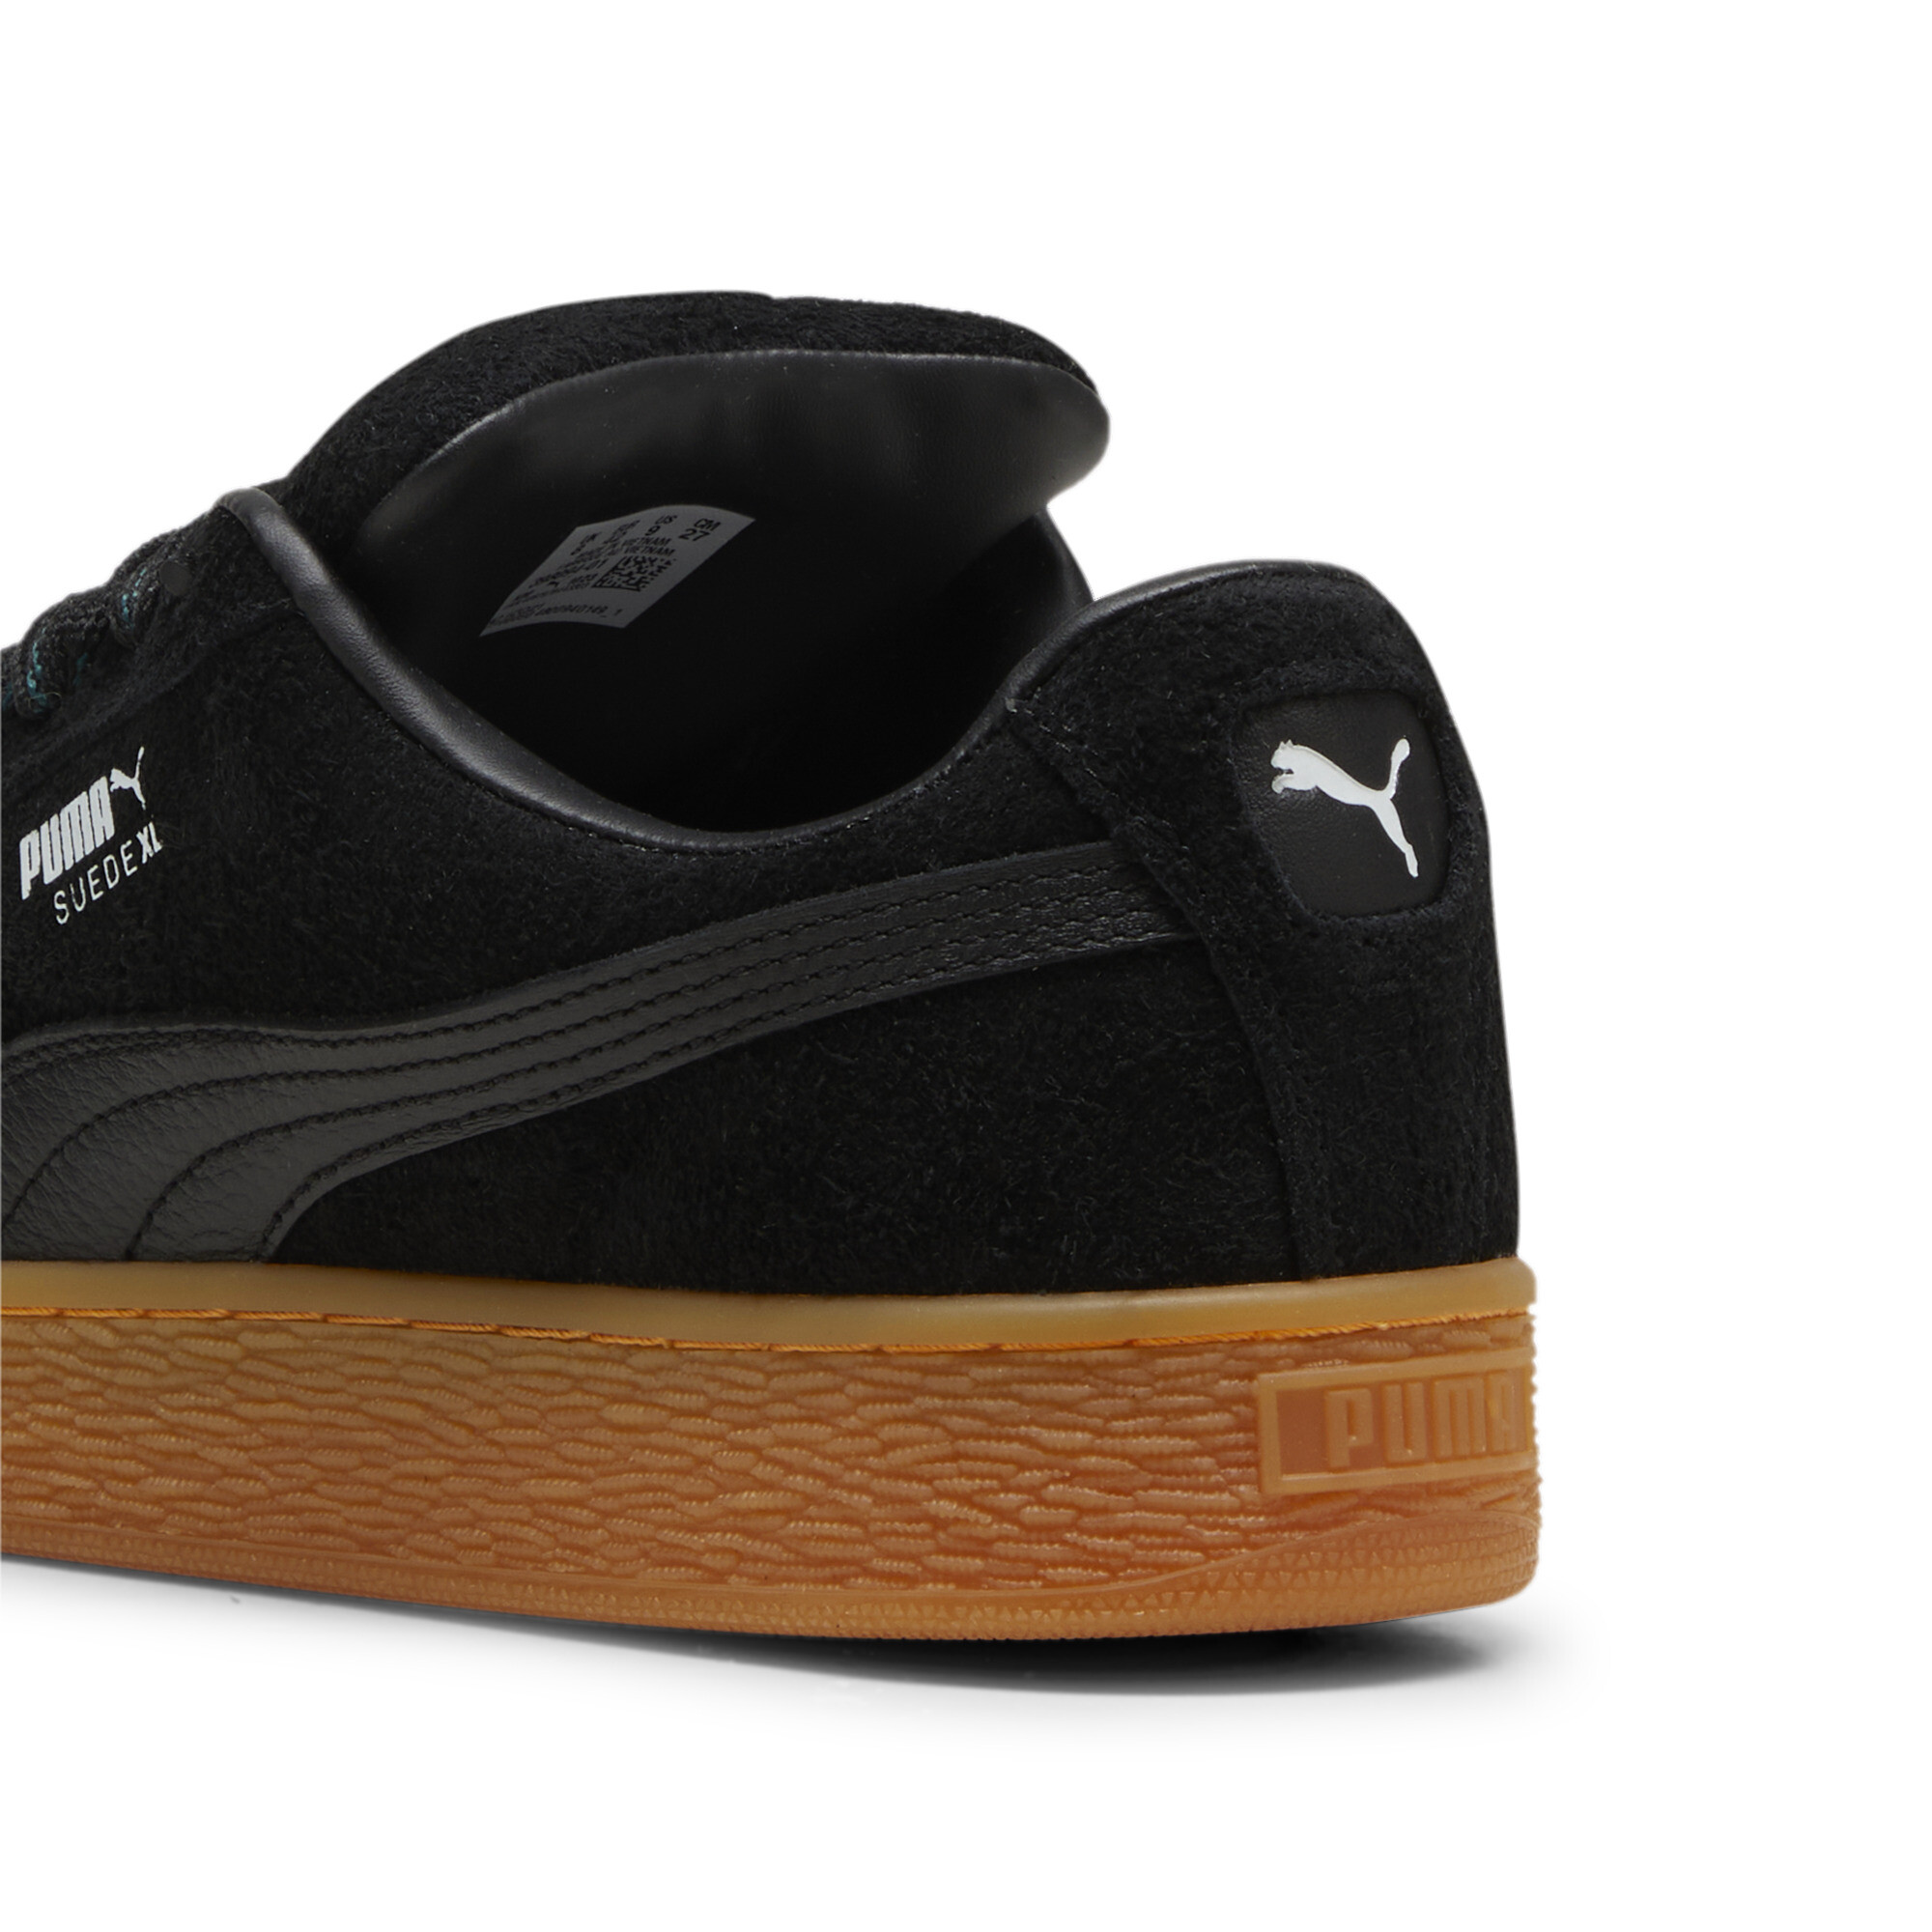 Puma Suede XL Flecked Unisex, Black, Size 48, Shoes